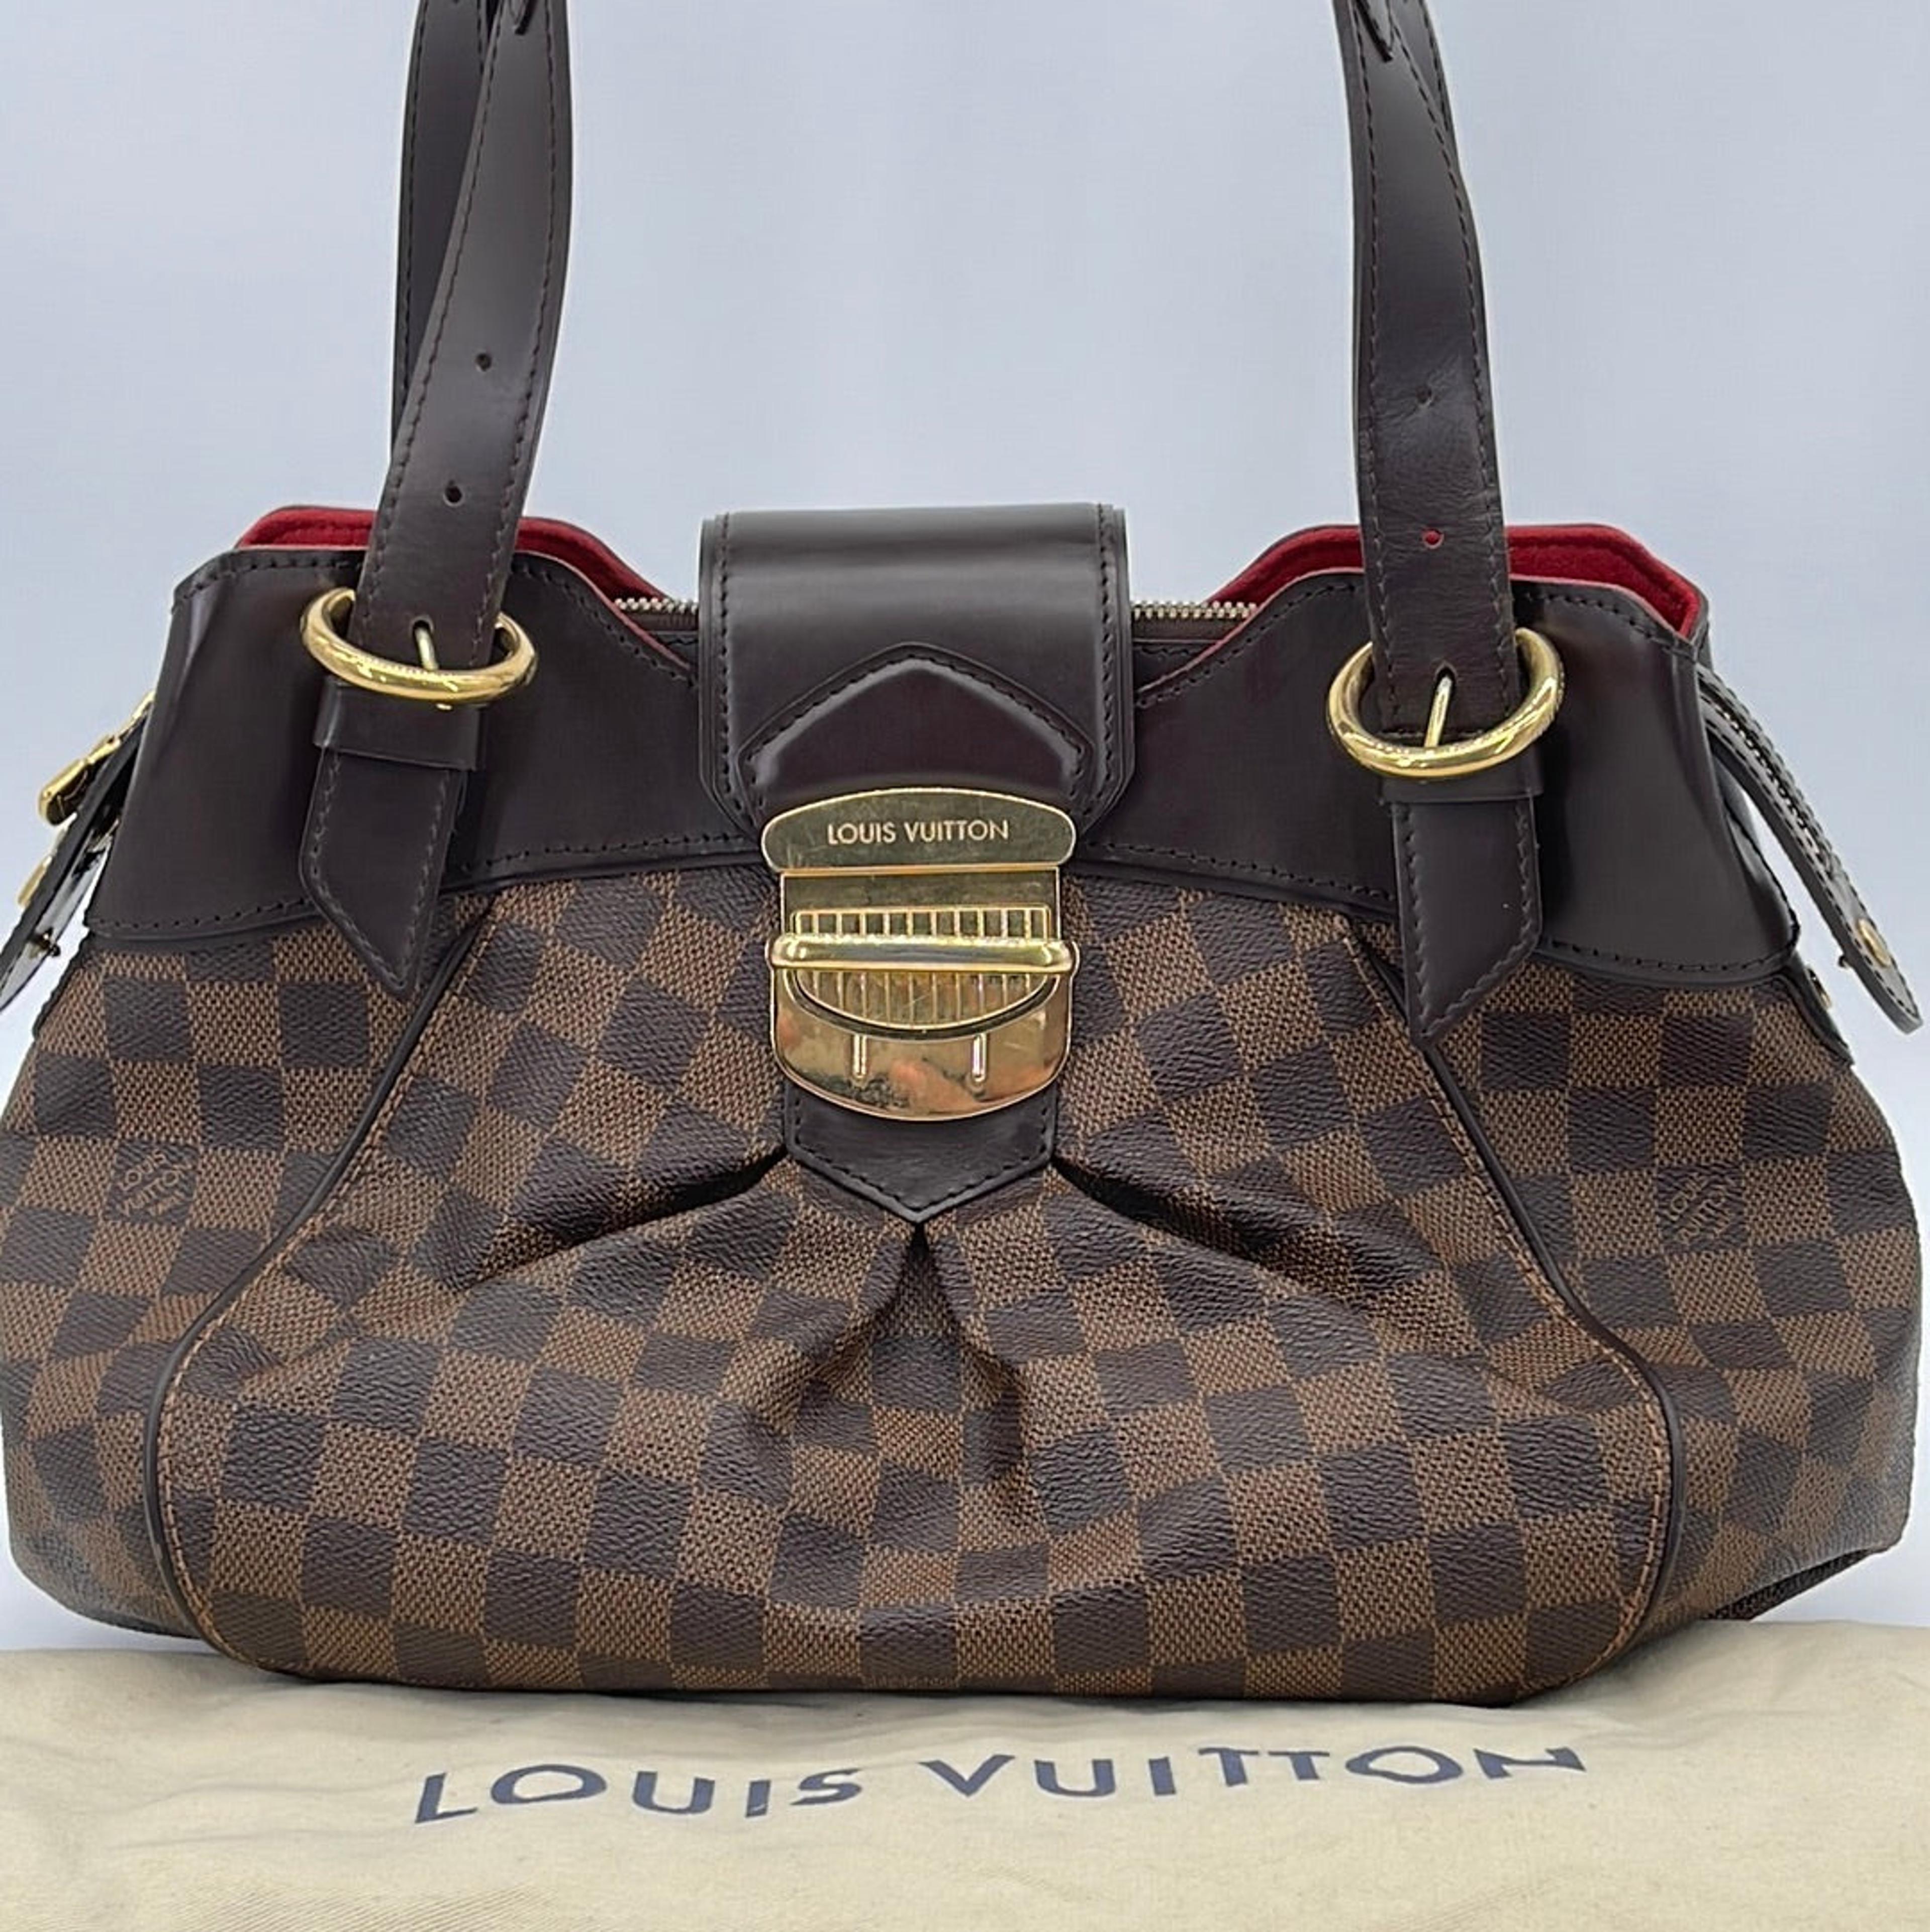 How To Spot a Fake: Louis Vuitton Damier Ebene Sistina Edition